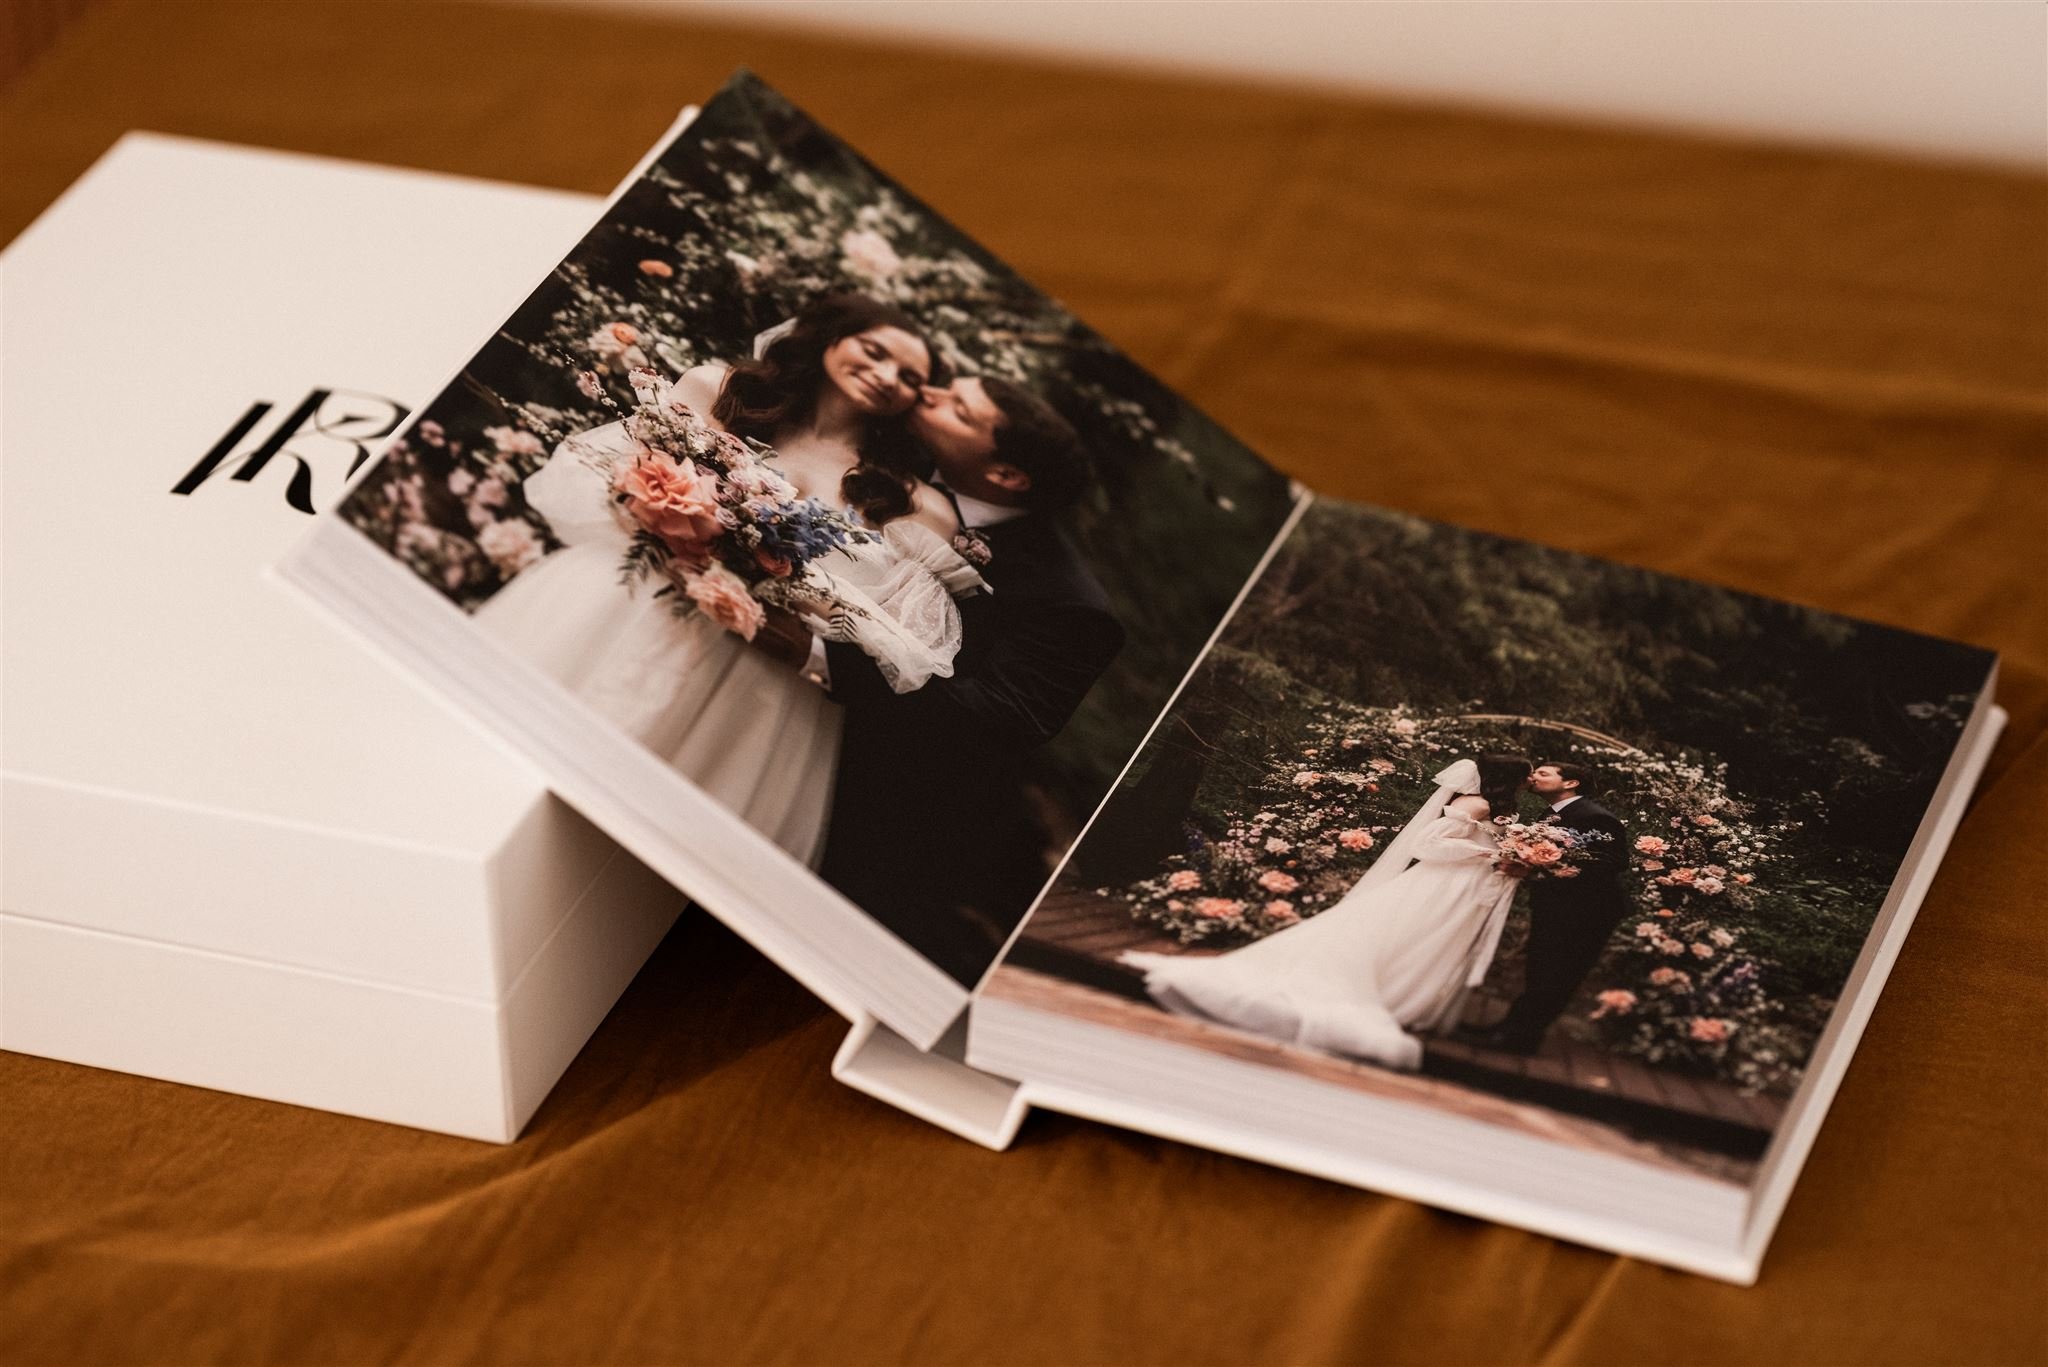 Lovelenscapes Photo + Film - Brisbane Mallorca Wedding Photographer Videographer - Wedding Album Graphistudio - 115_websize.jpg